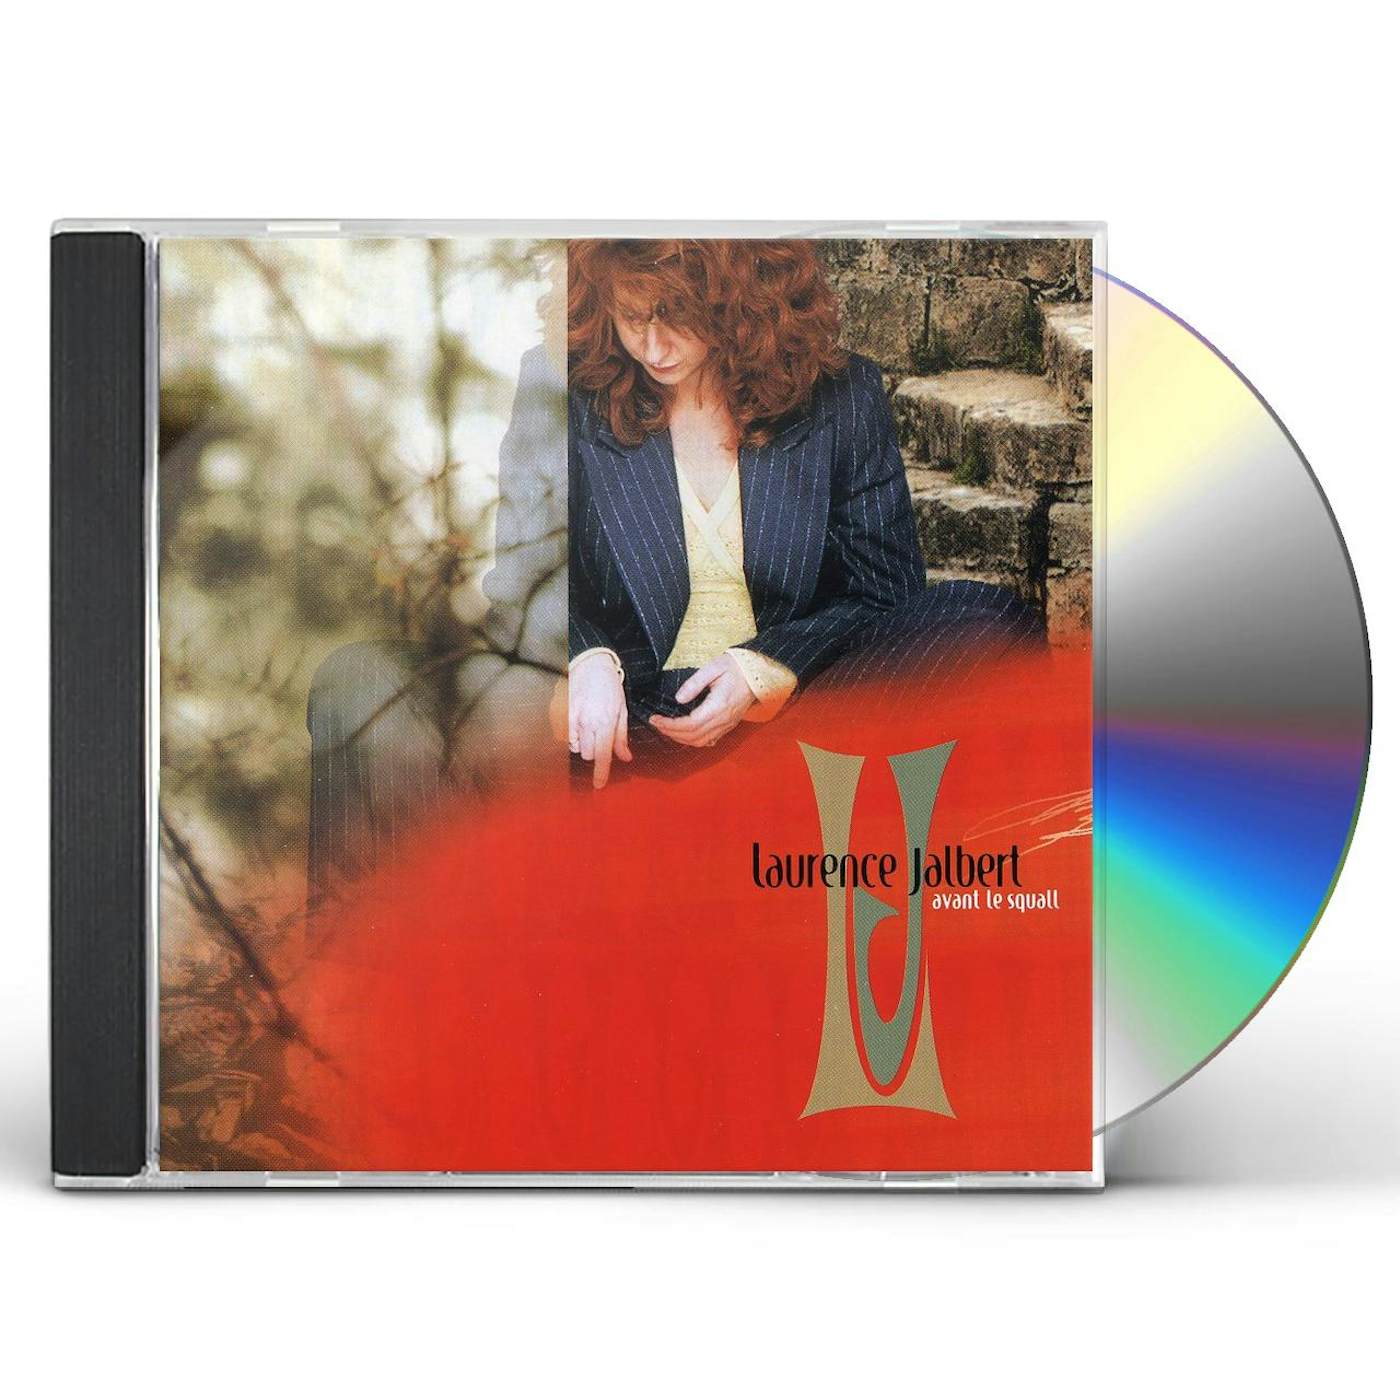 Laurence Jalbert AVANT LE SQUALL CD